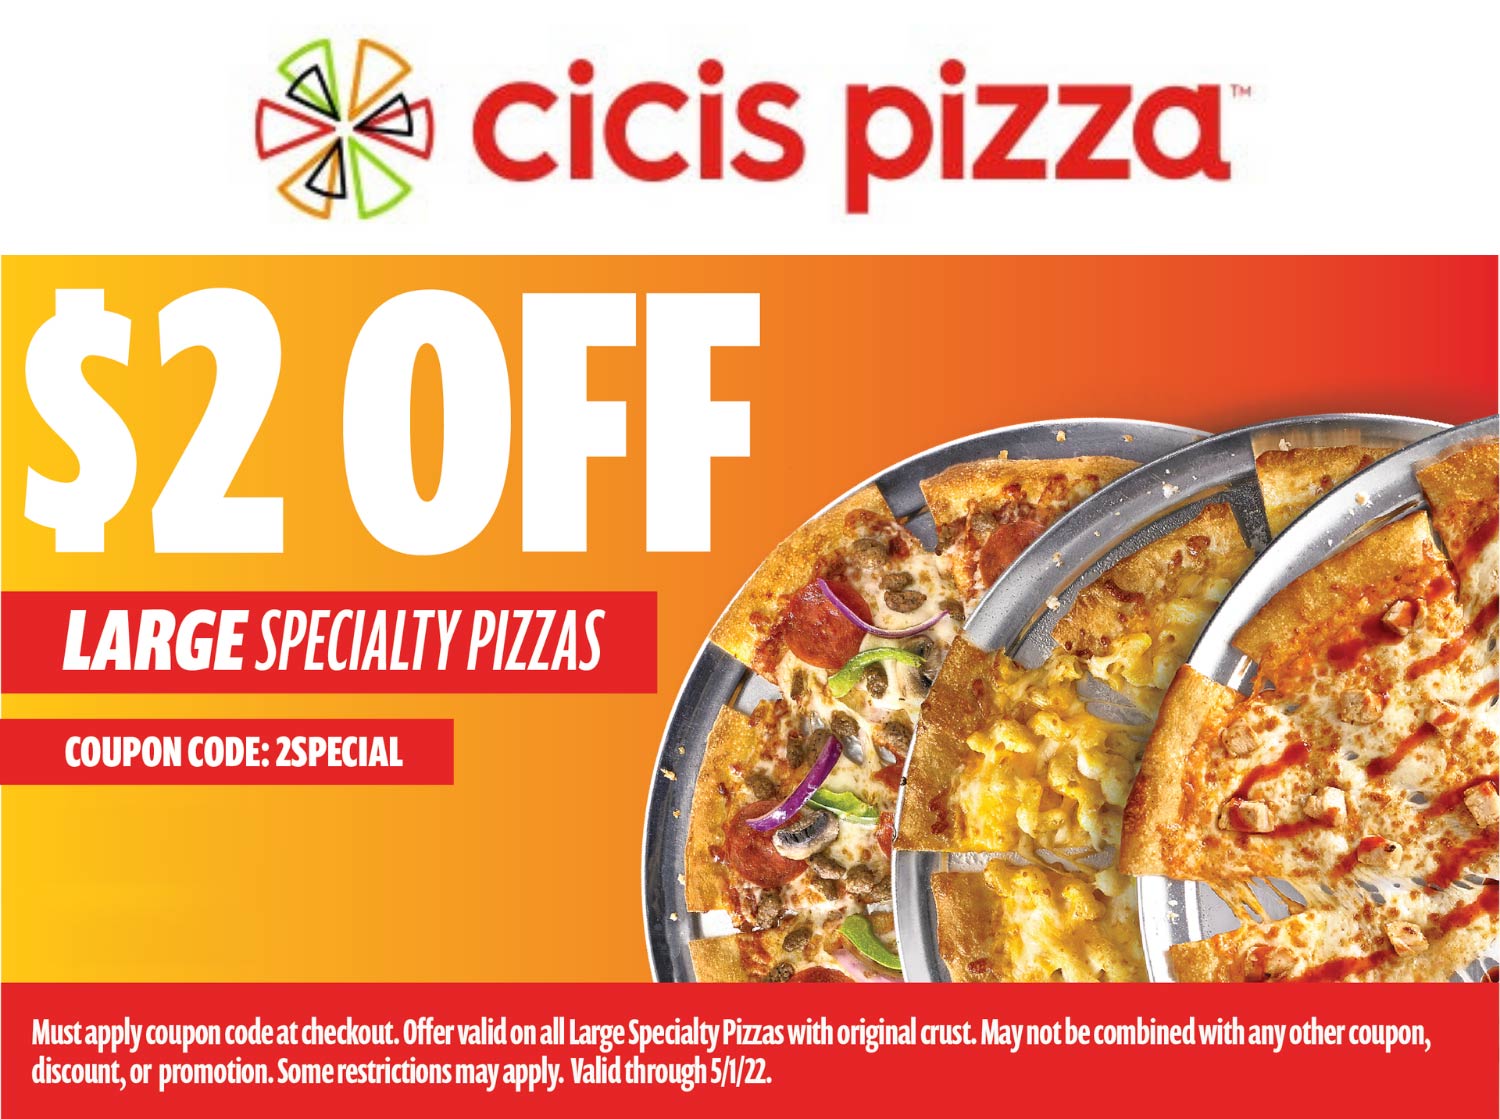 Cicis Pizza restaurants Coupon  $2 off large specialty pizzas at Cicis Pizza via promo code 2SPECIAL #cicispizza 